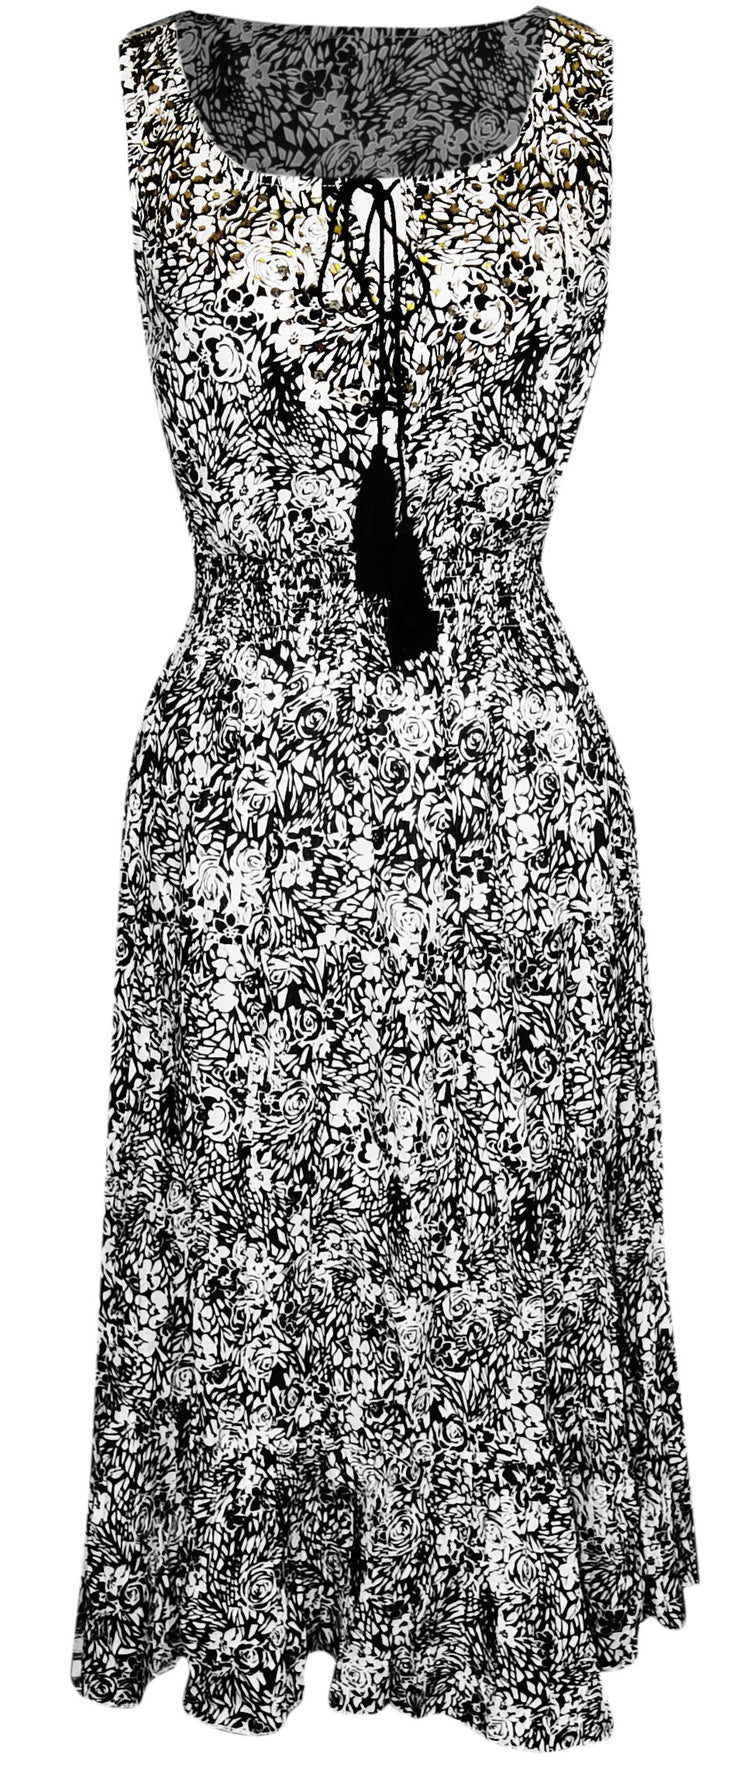 A1571-Floral-Sparkle-Dress-Black-XL-KL